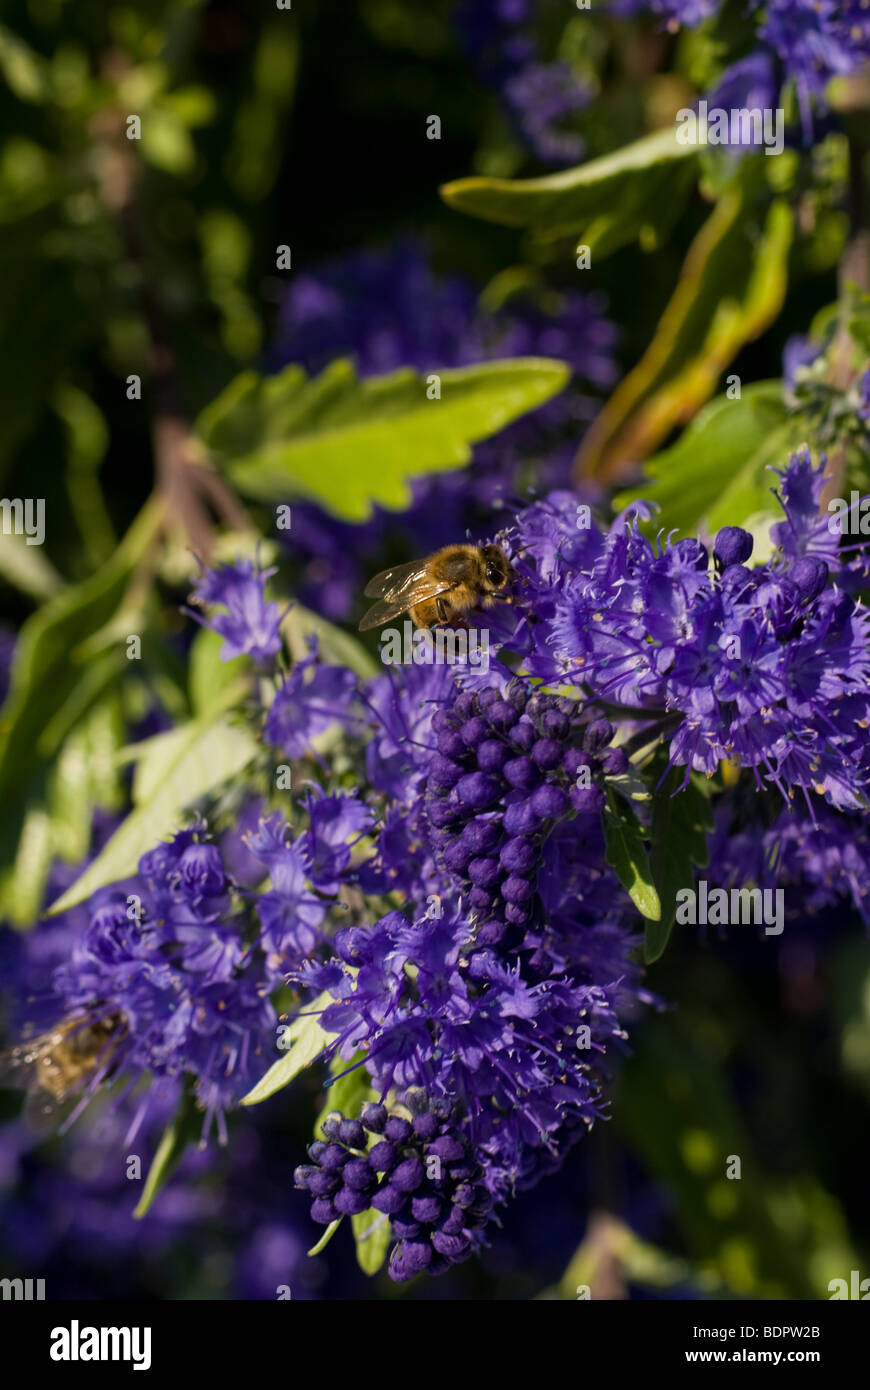 Honey bee collecting pollen Stock Photo